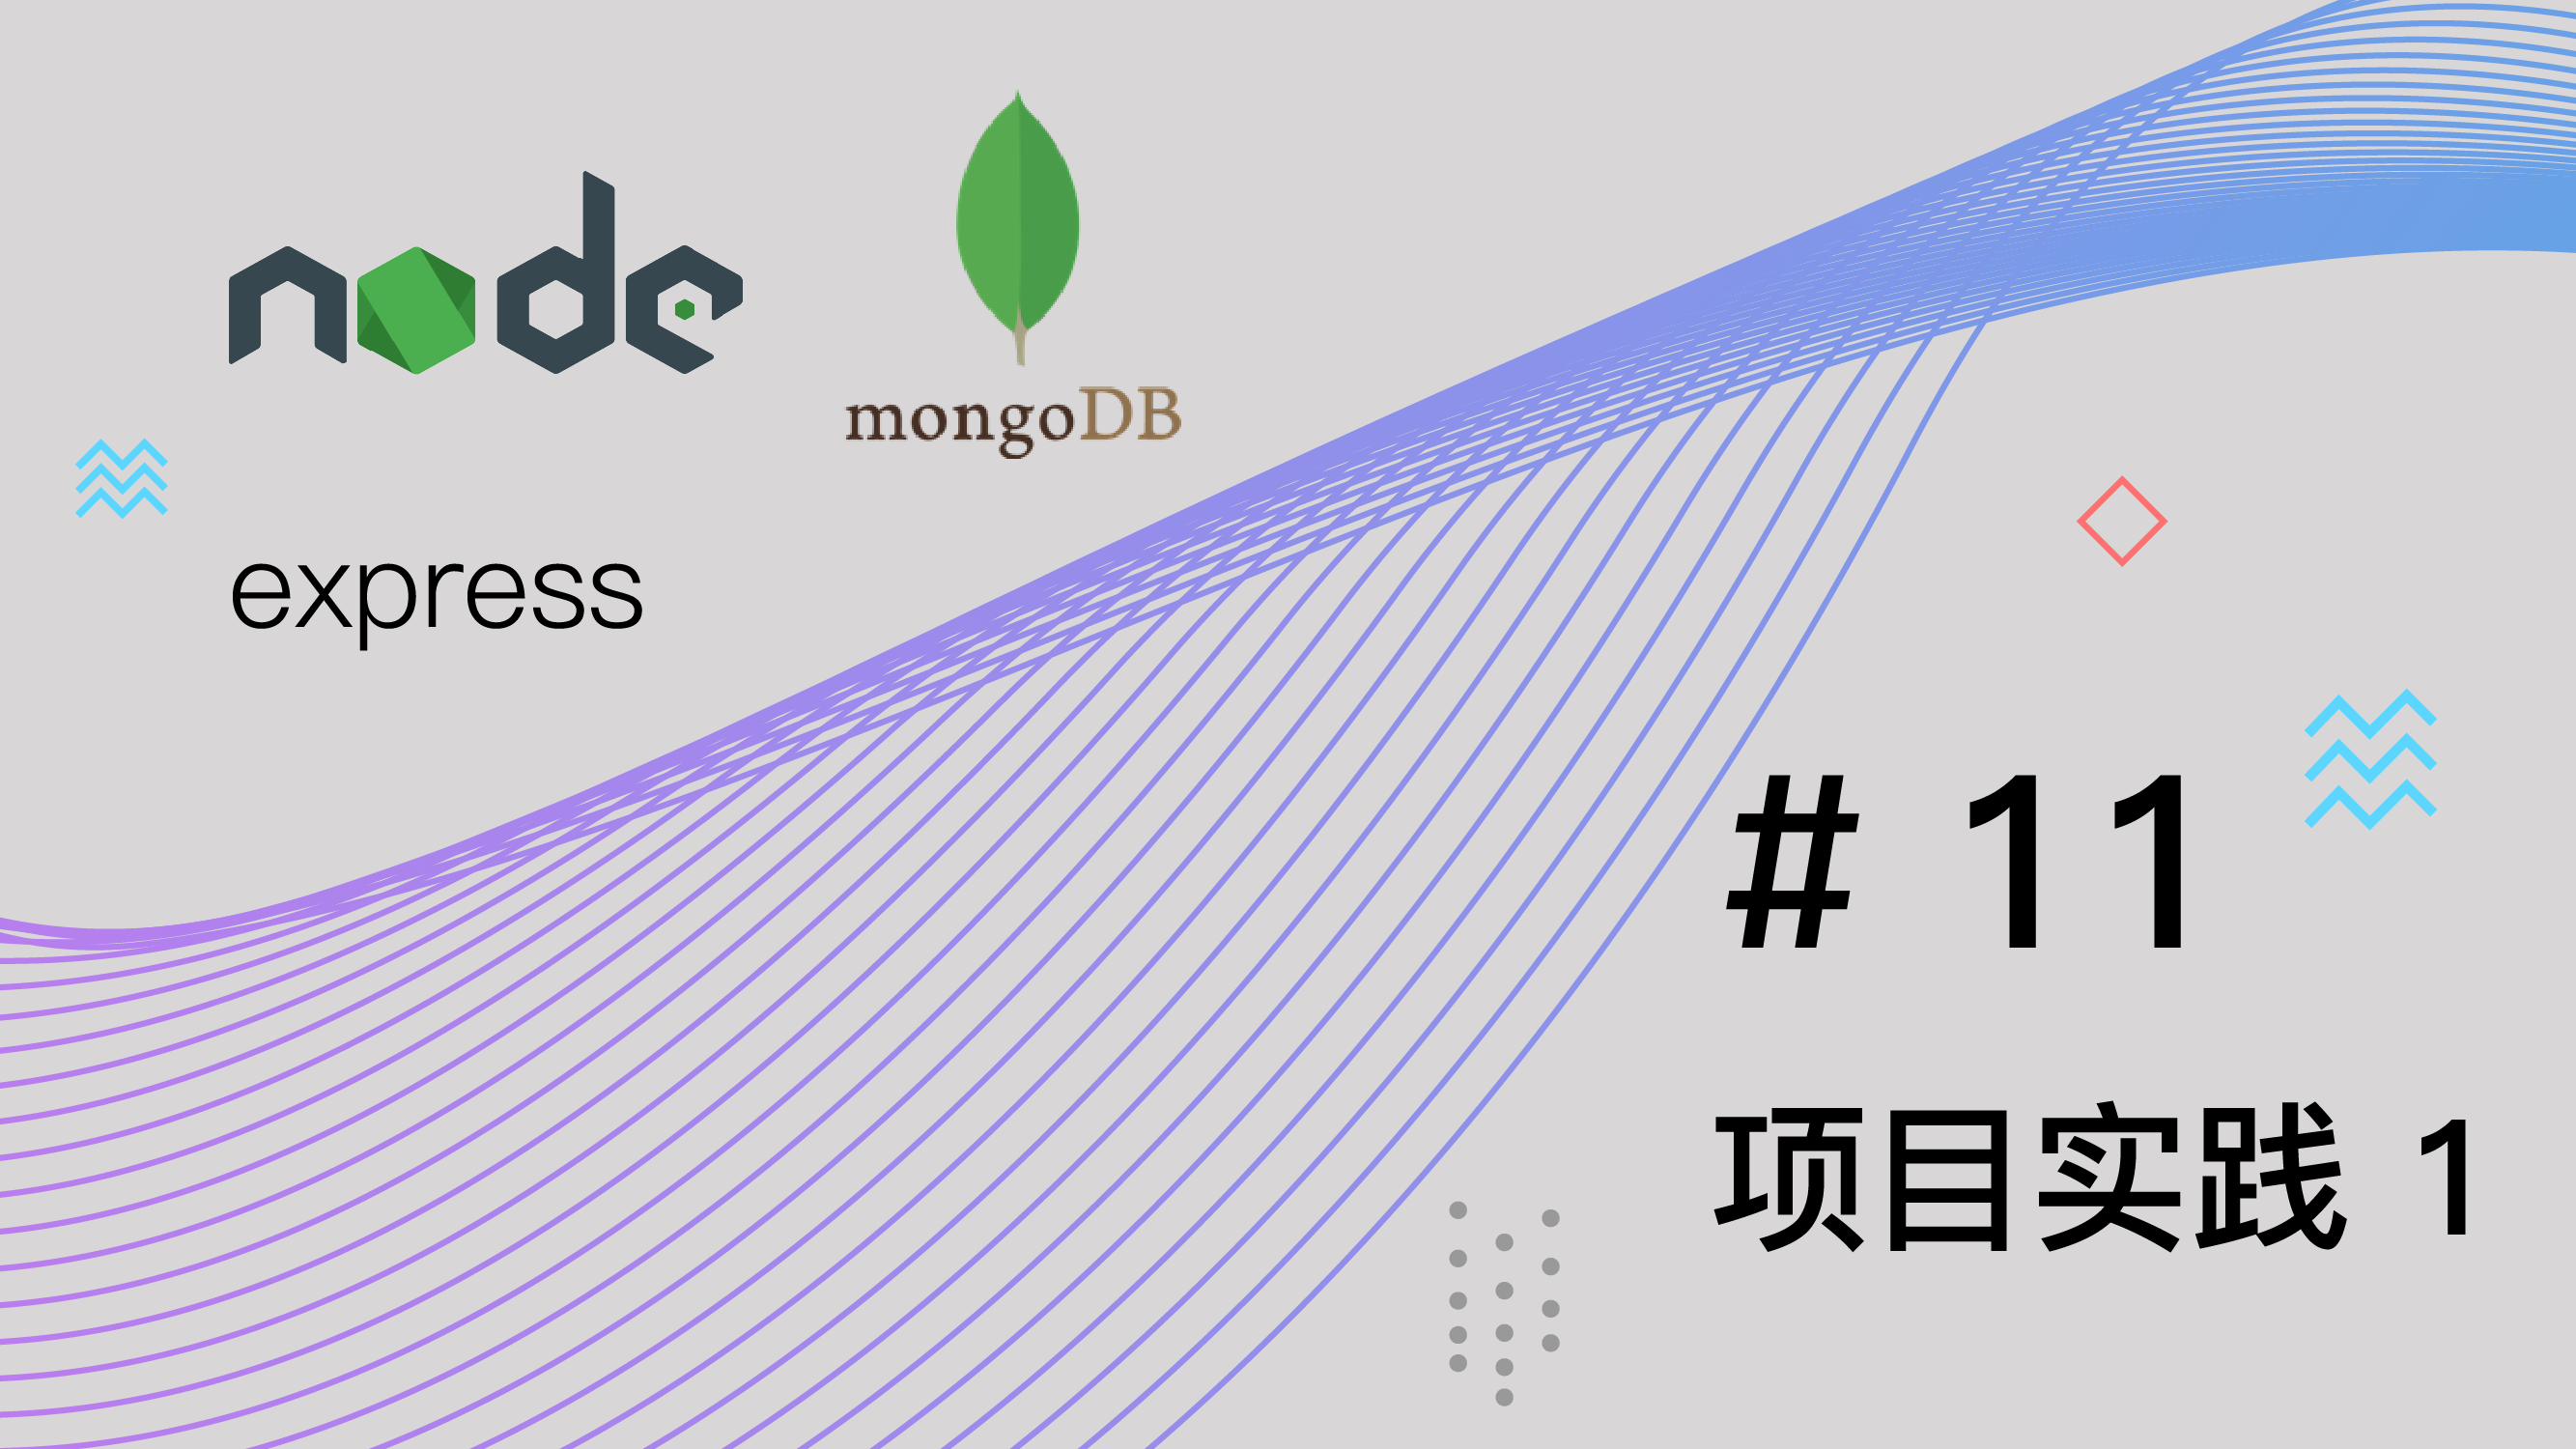 Node.js + Express + MongoDB 基础篇视频教程 #11 项目实践 part 1 项目搭建